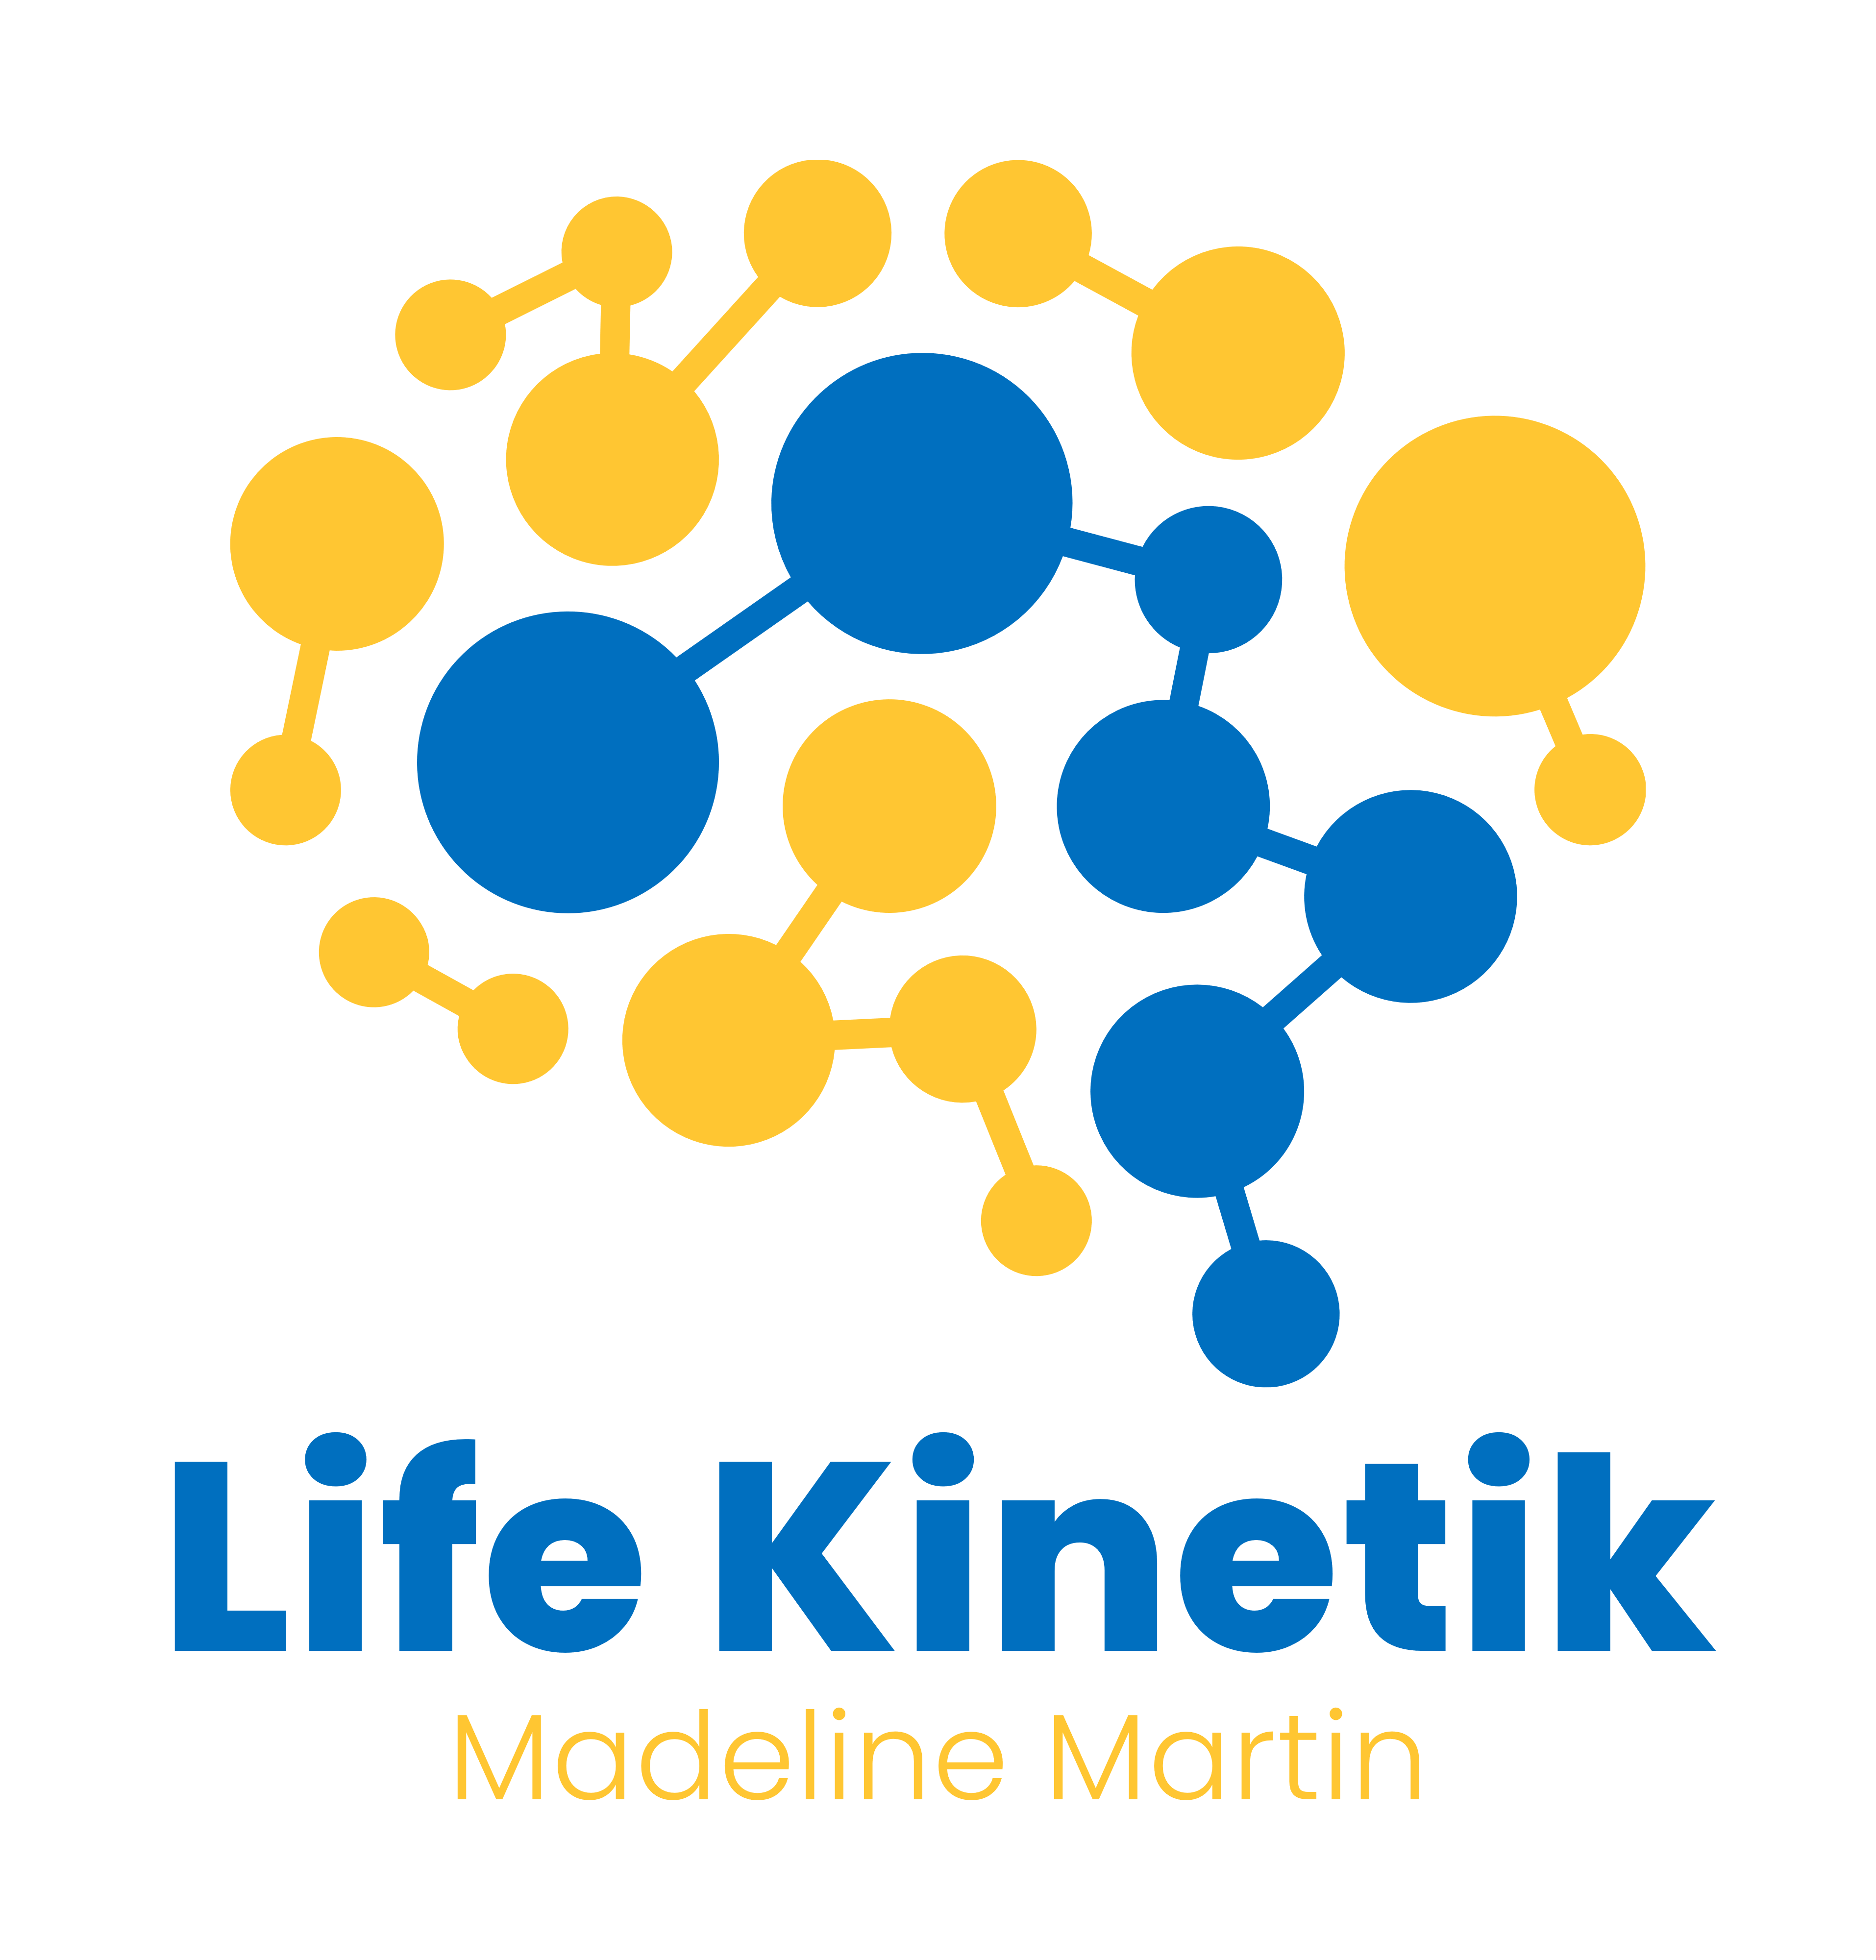 Life Kinetik – Madeline Martin – Life Kinetik, das einzigartige